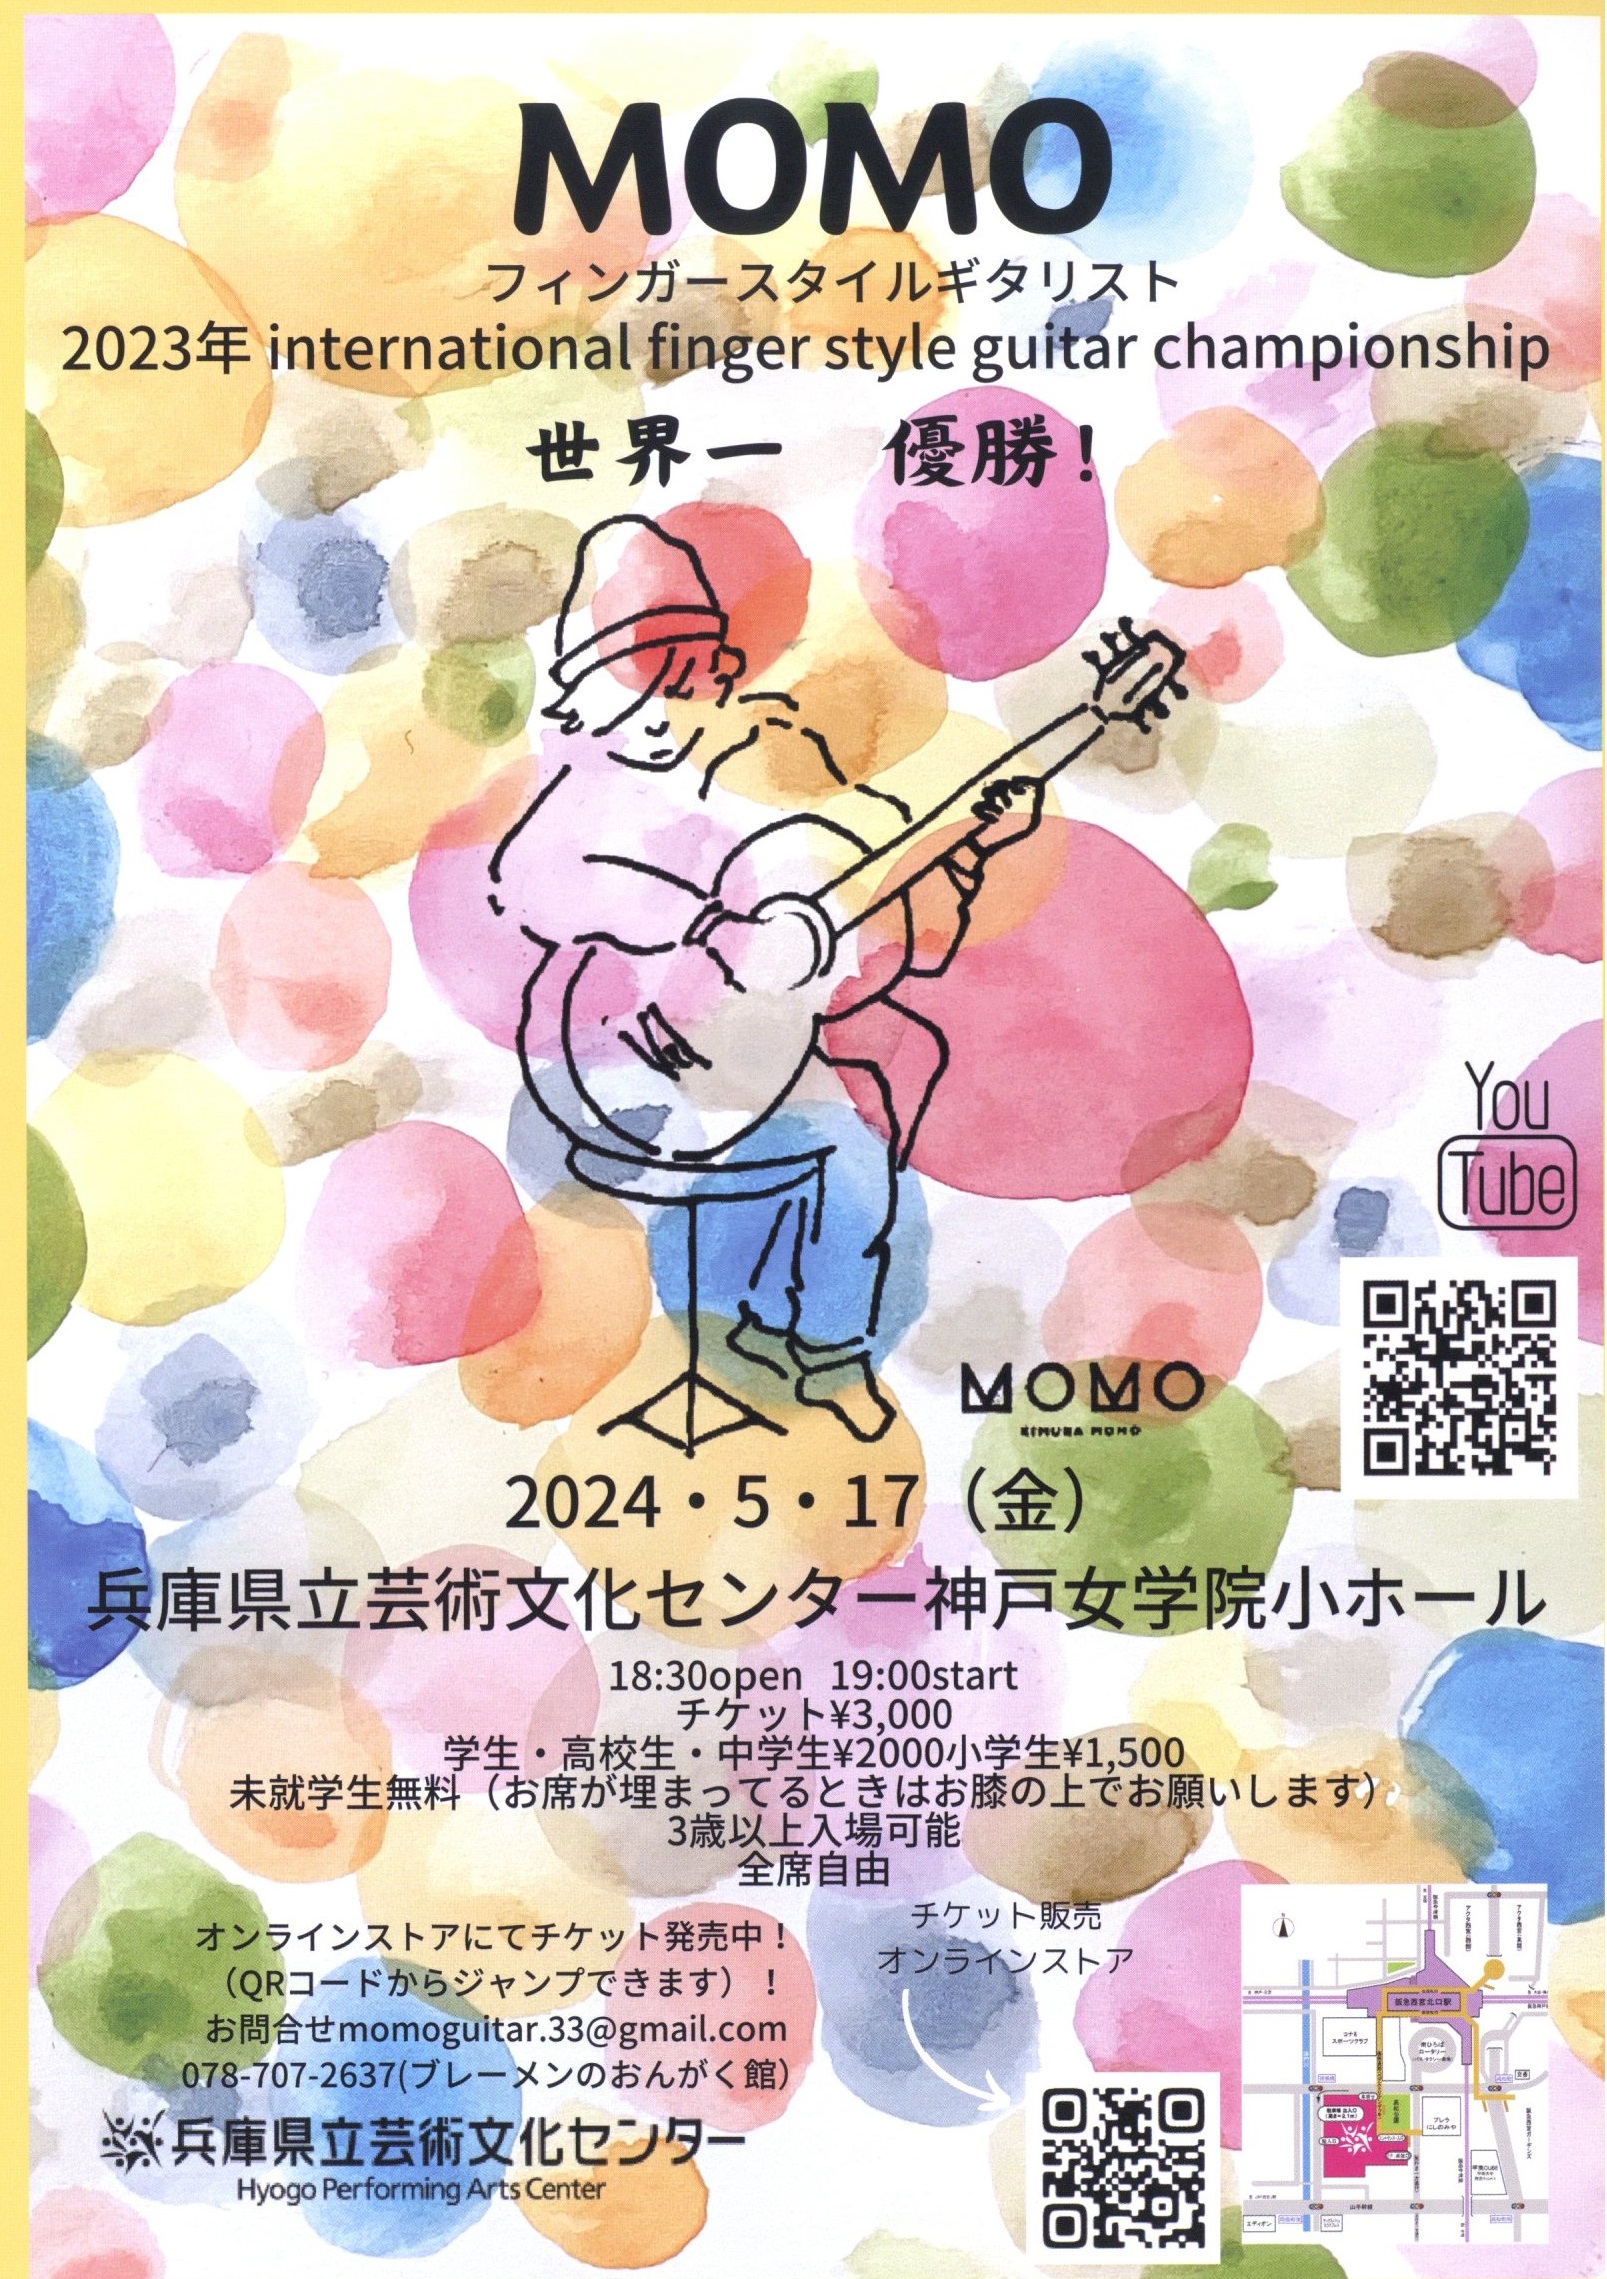 MOMO ソロギターコンサート